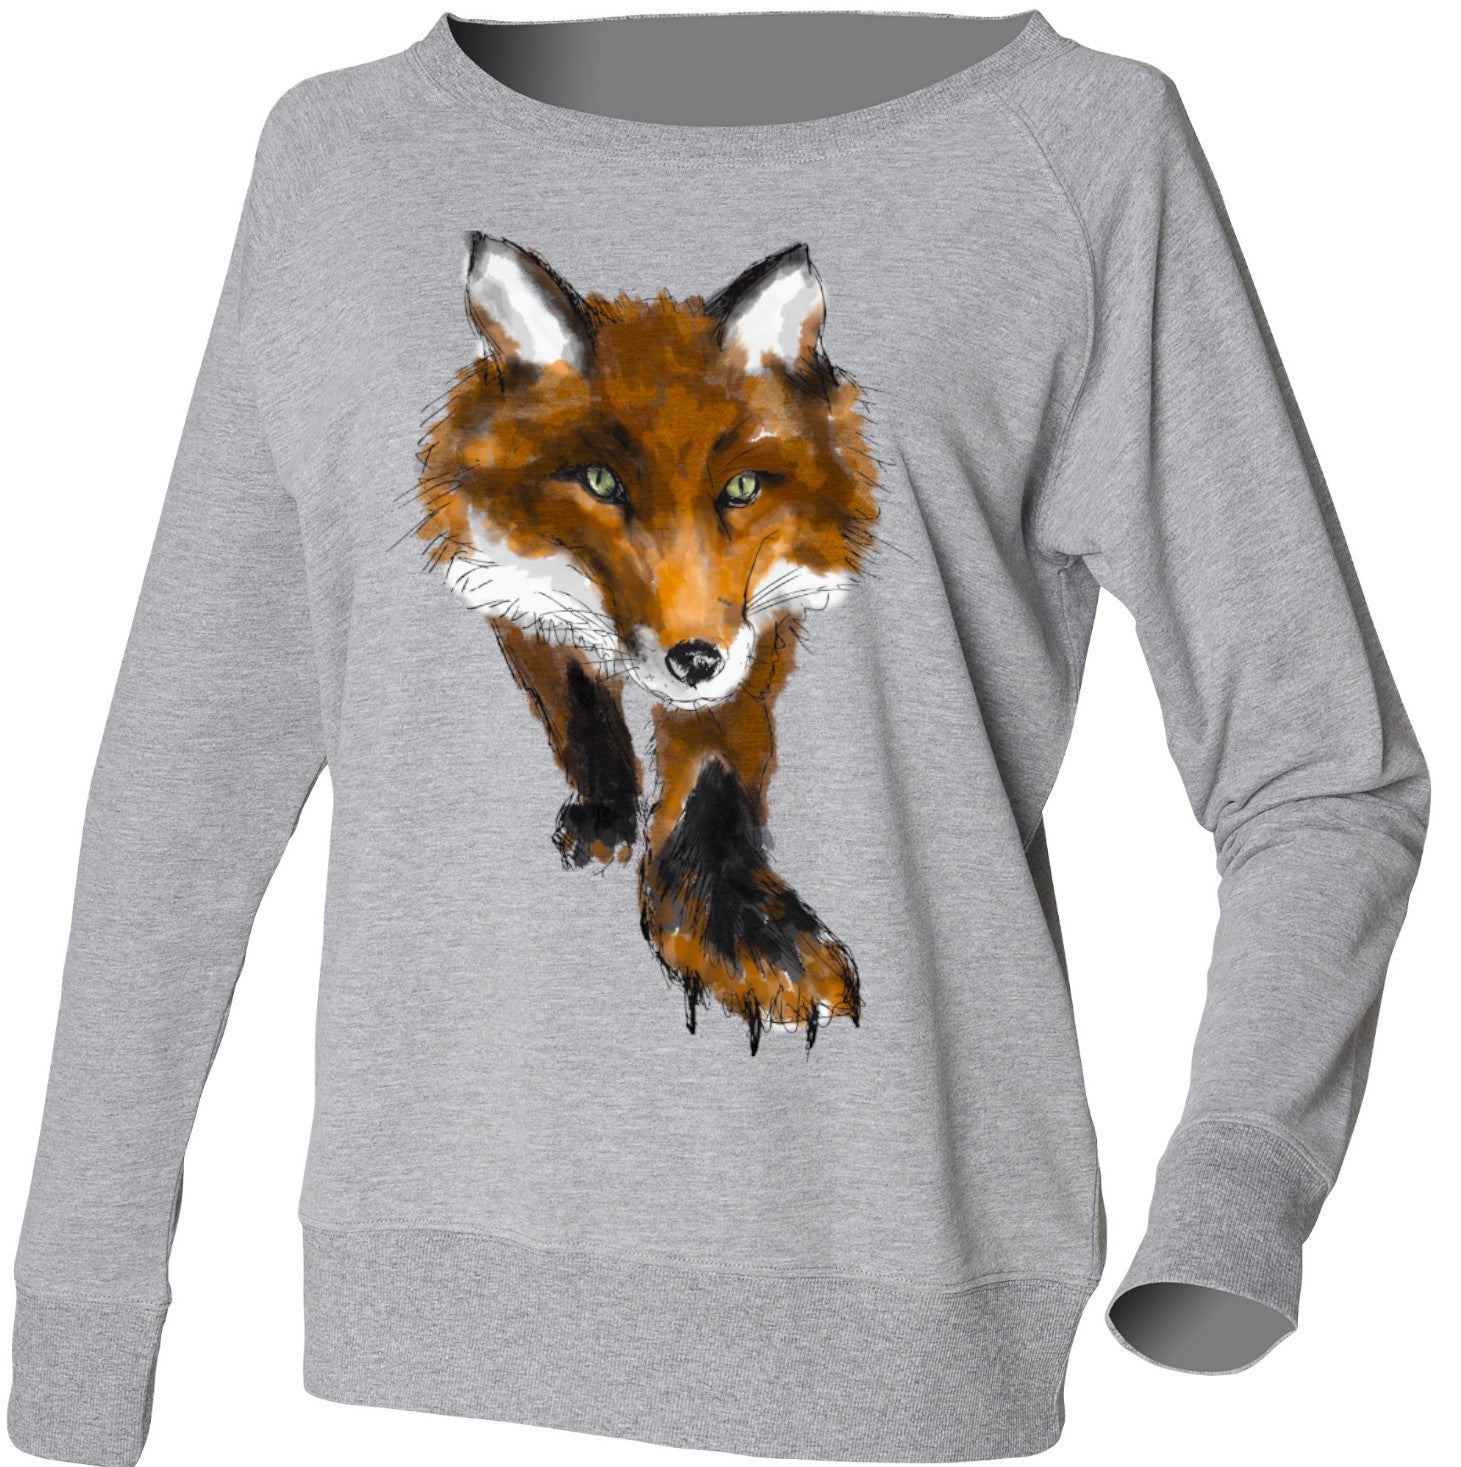 Grey jumper, sneaky fox